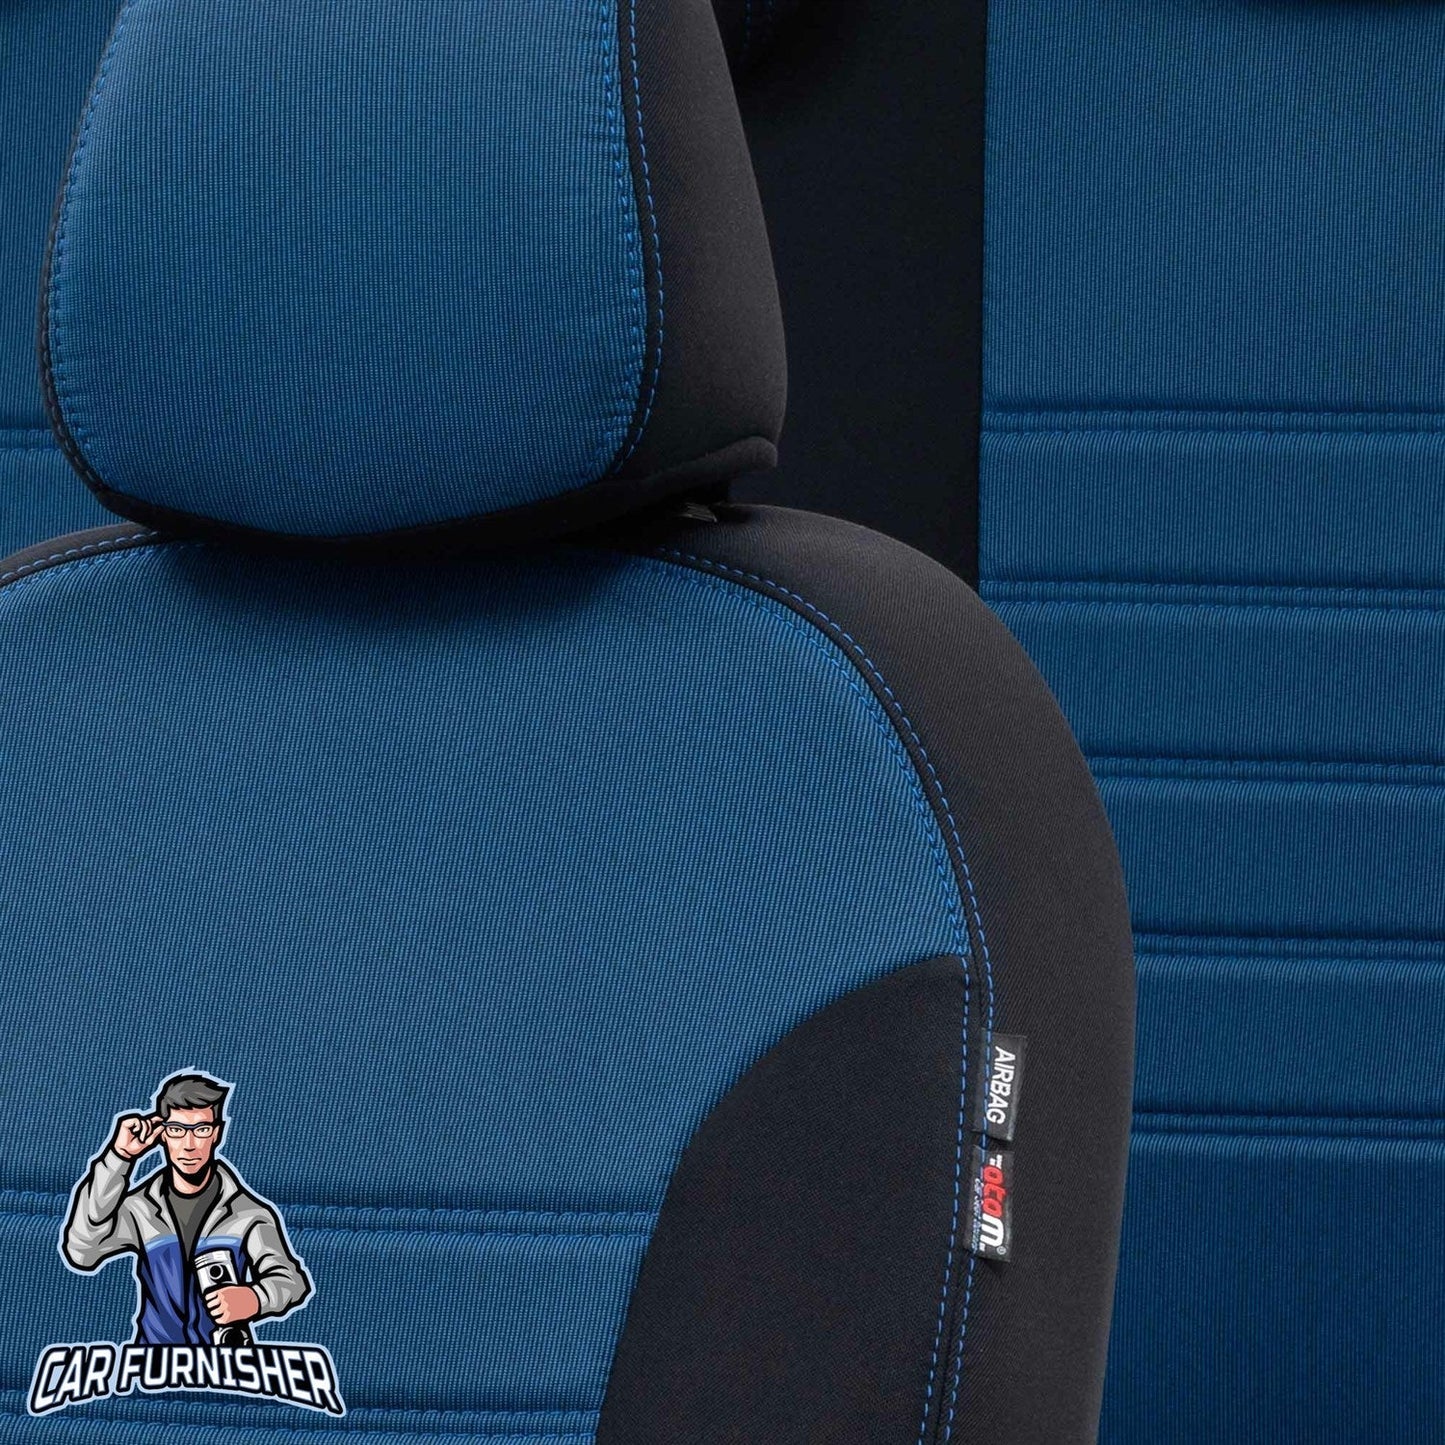 Volvo S90 Seat Cover Original Jacquard Design Blue Jacquard Fabric